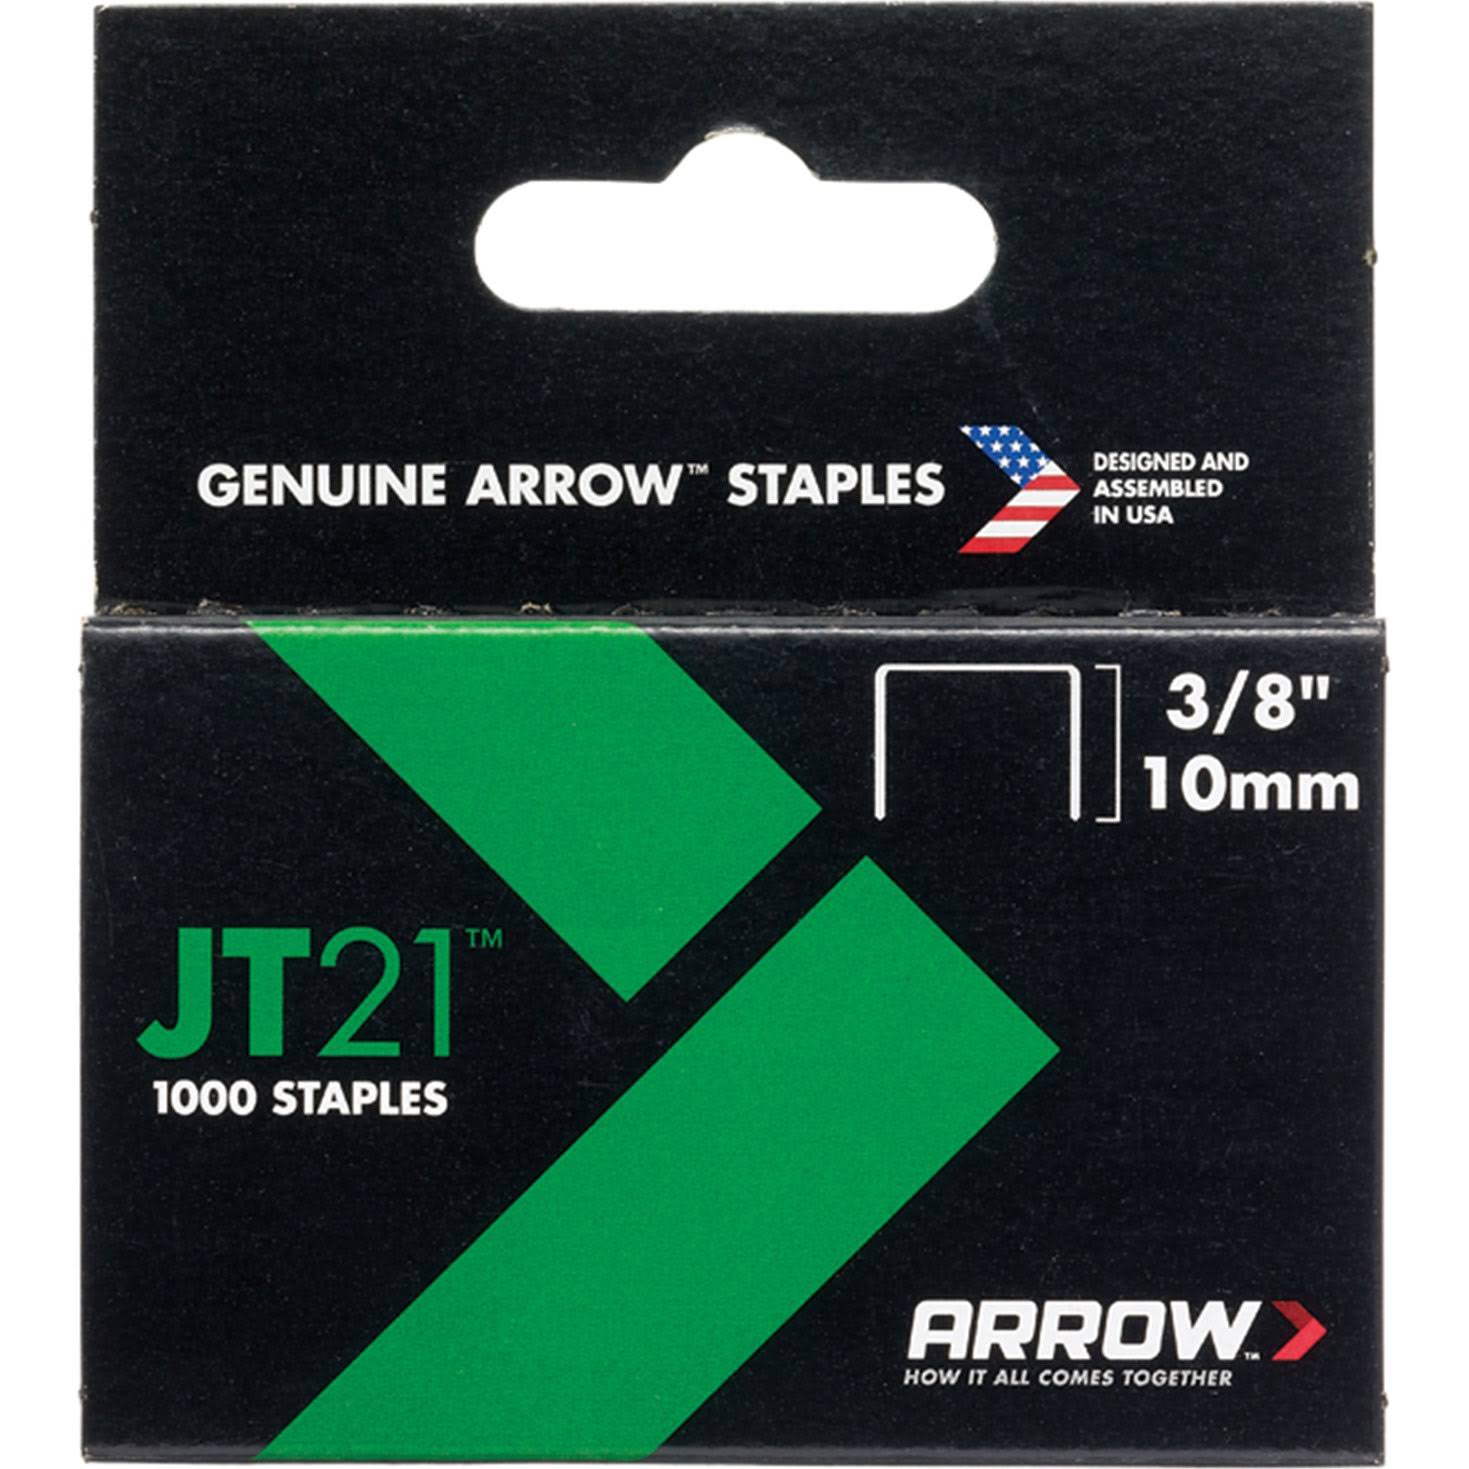 Arrow JT21 Genuine Arrow Staples - # 276, 1.000